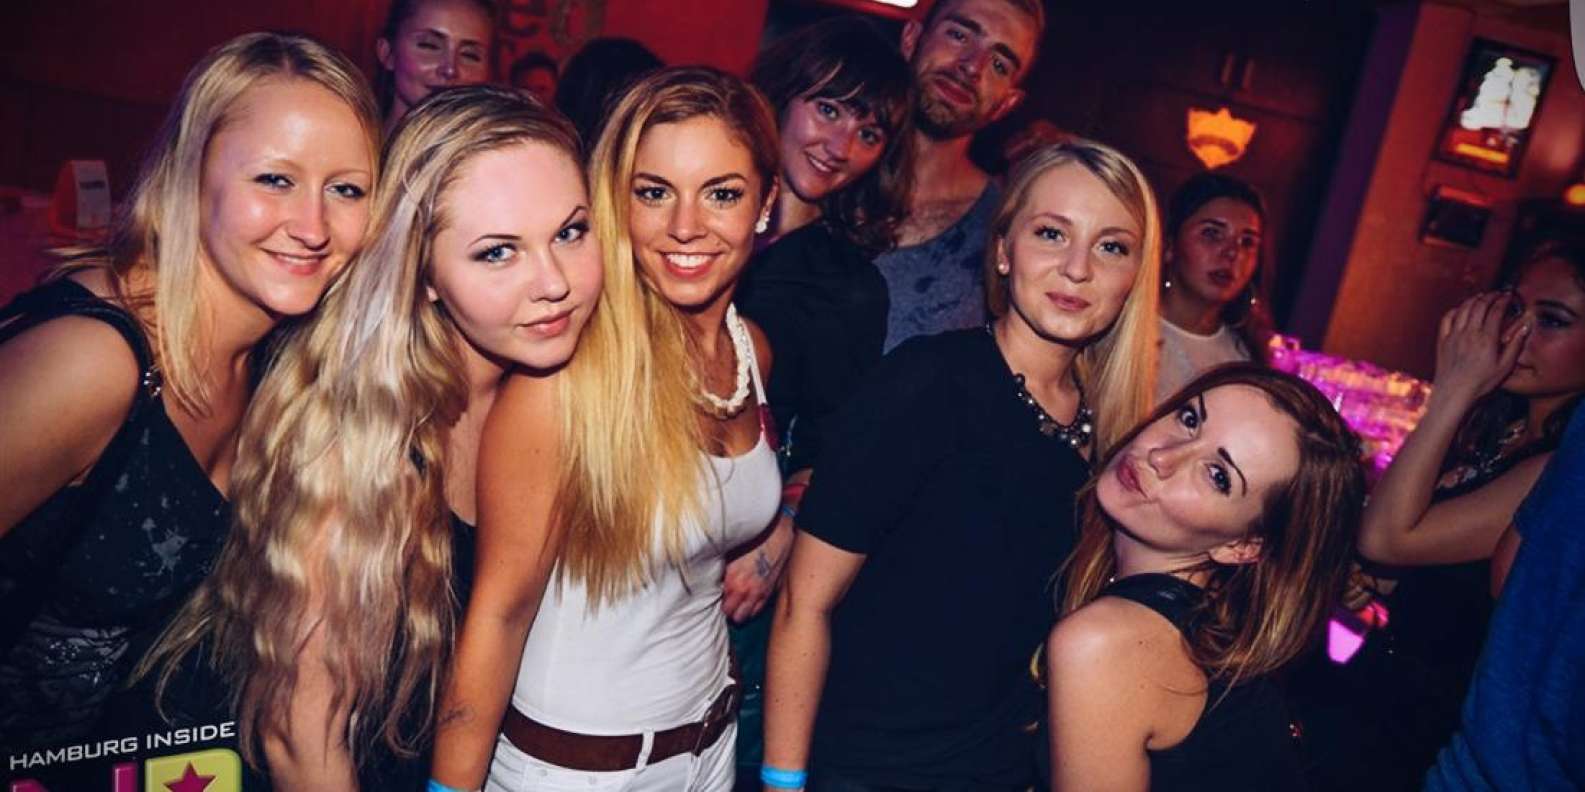 Top Munich Bars Where Your Bachelor Status Wont Feel Like a Disease